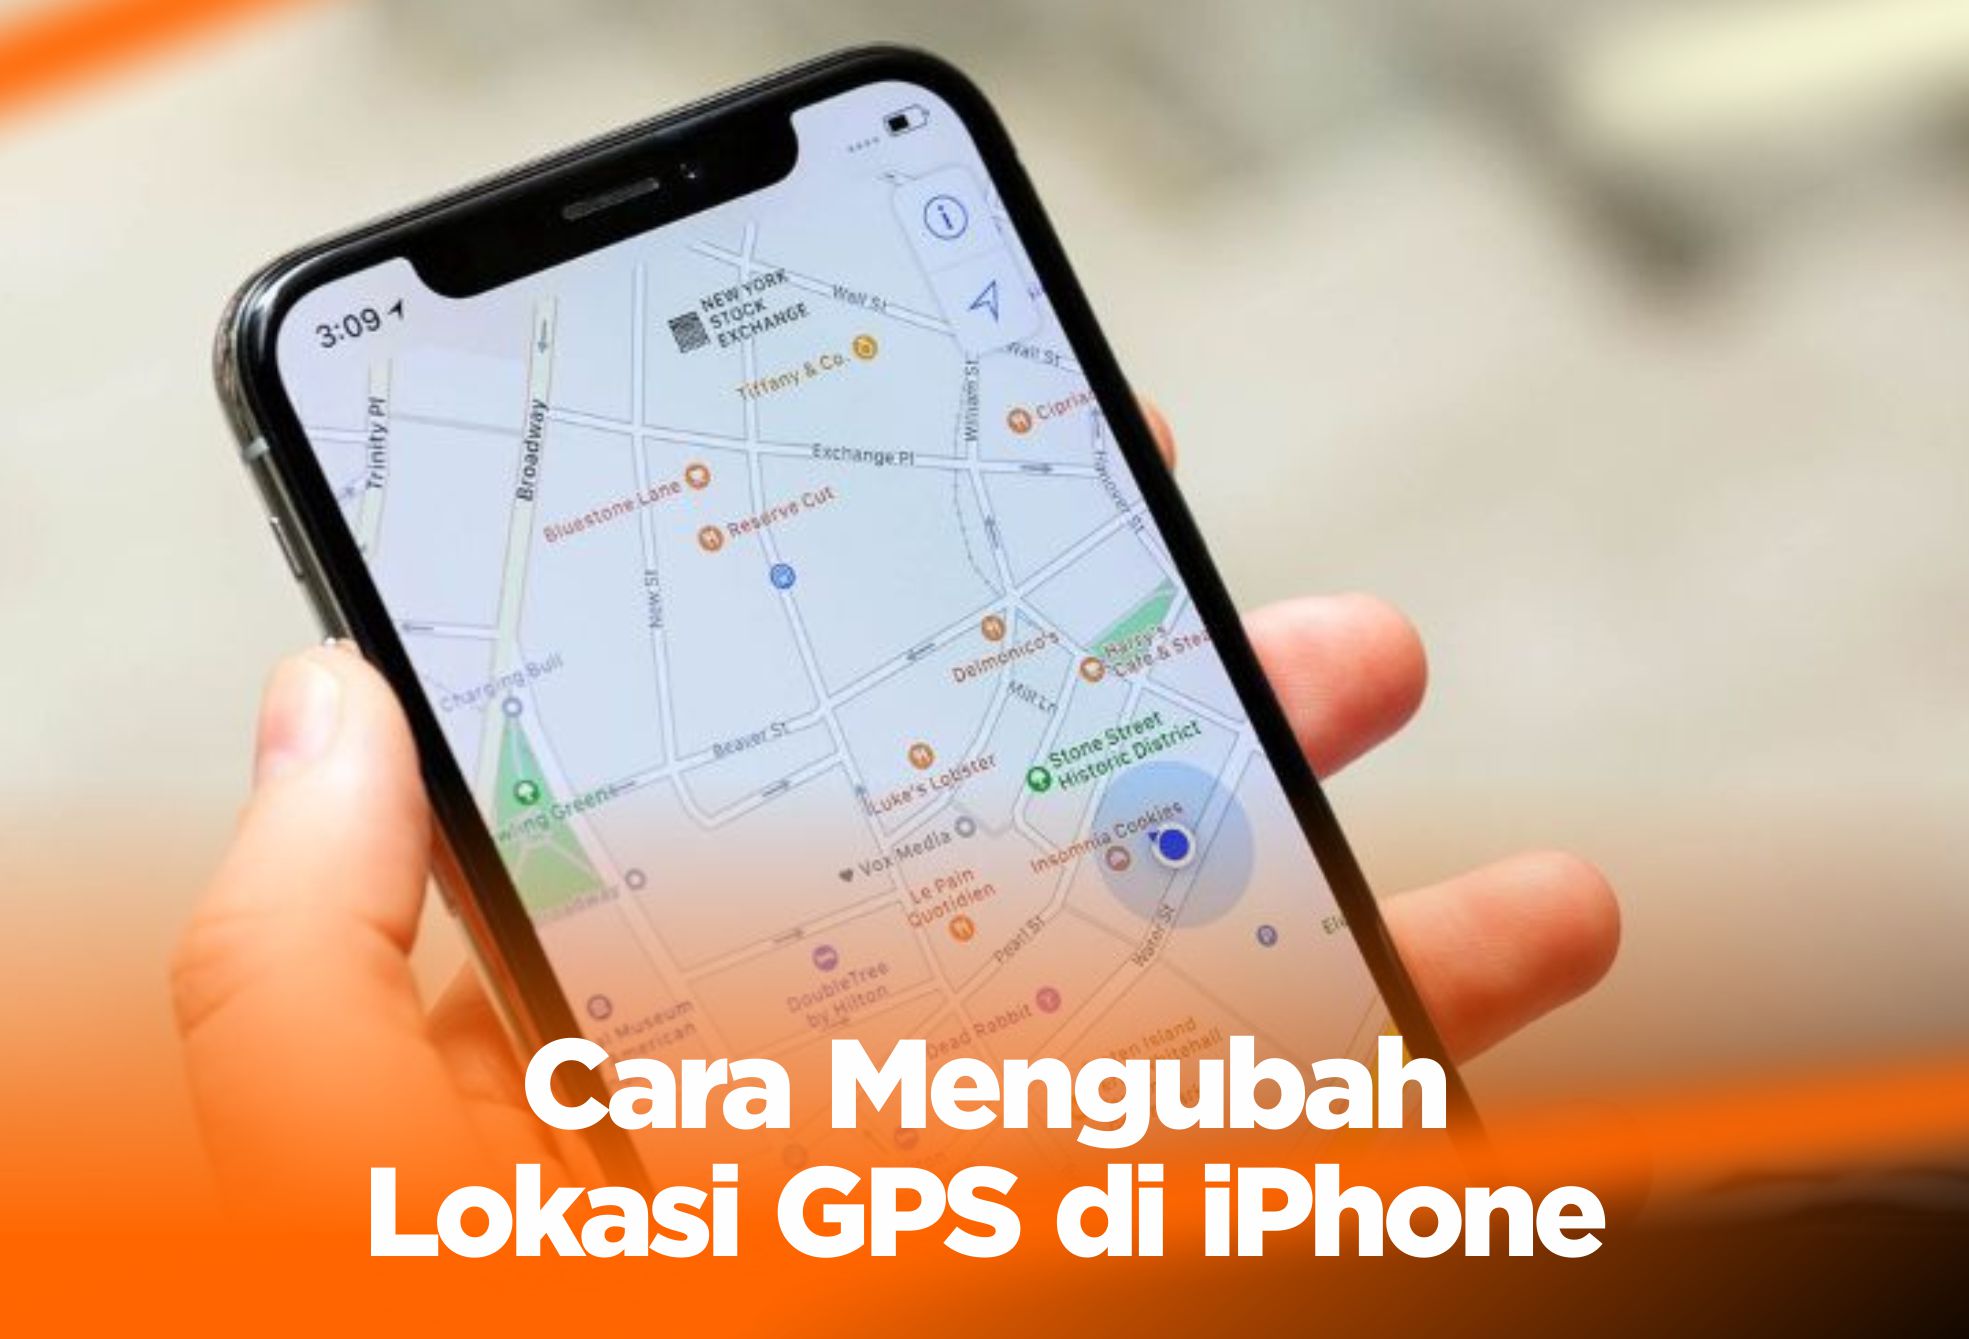 Cara Mengubah Lokasi GPS di iPhone